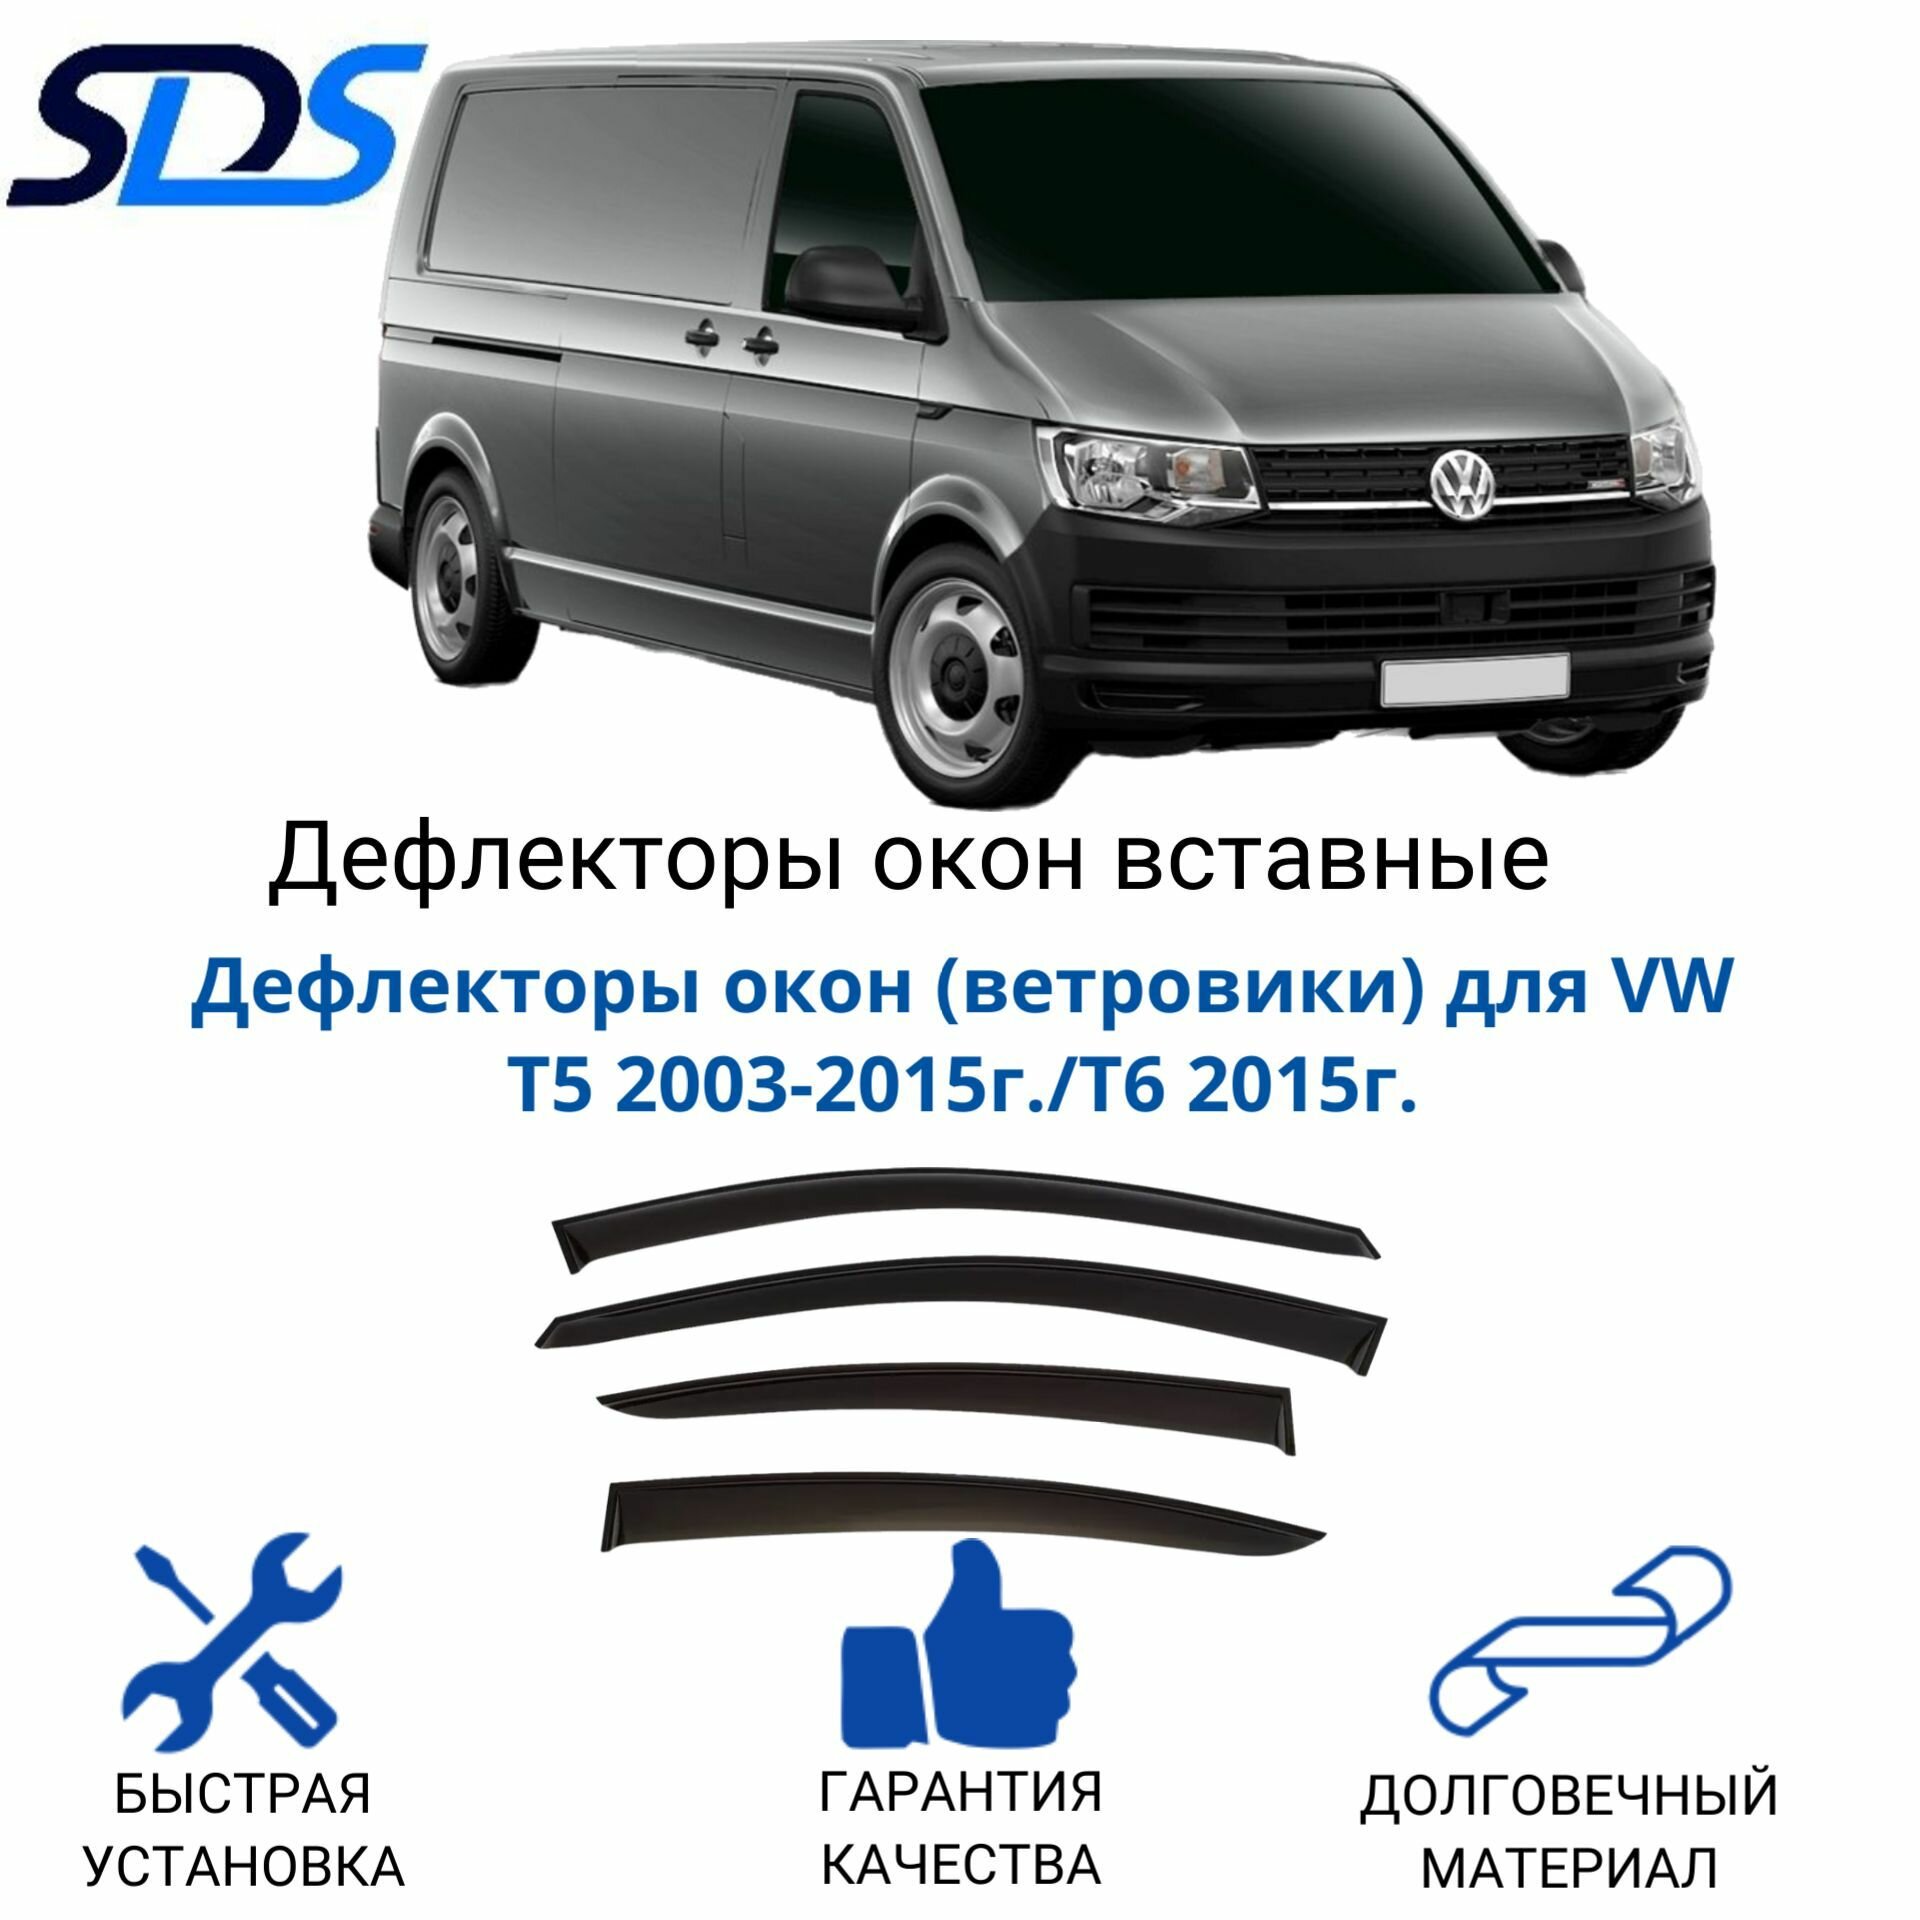 Дефлекторы окон (ветровики) для VW T5 2003-2015г./T6 2015г.